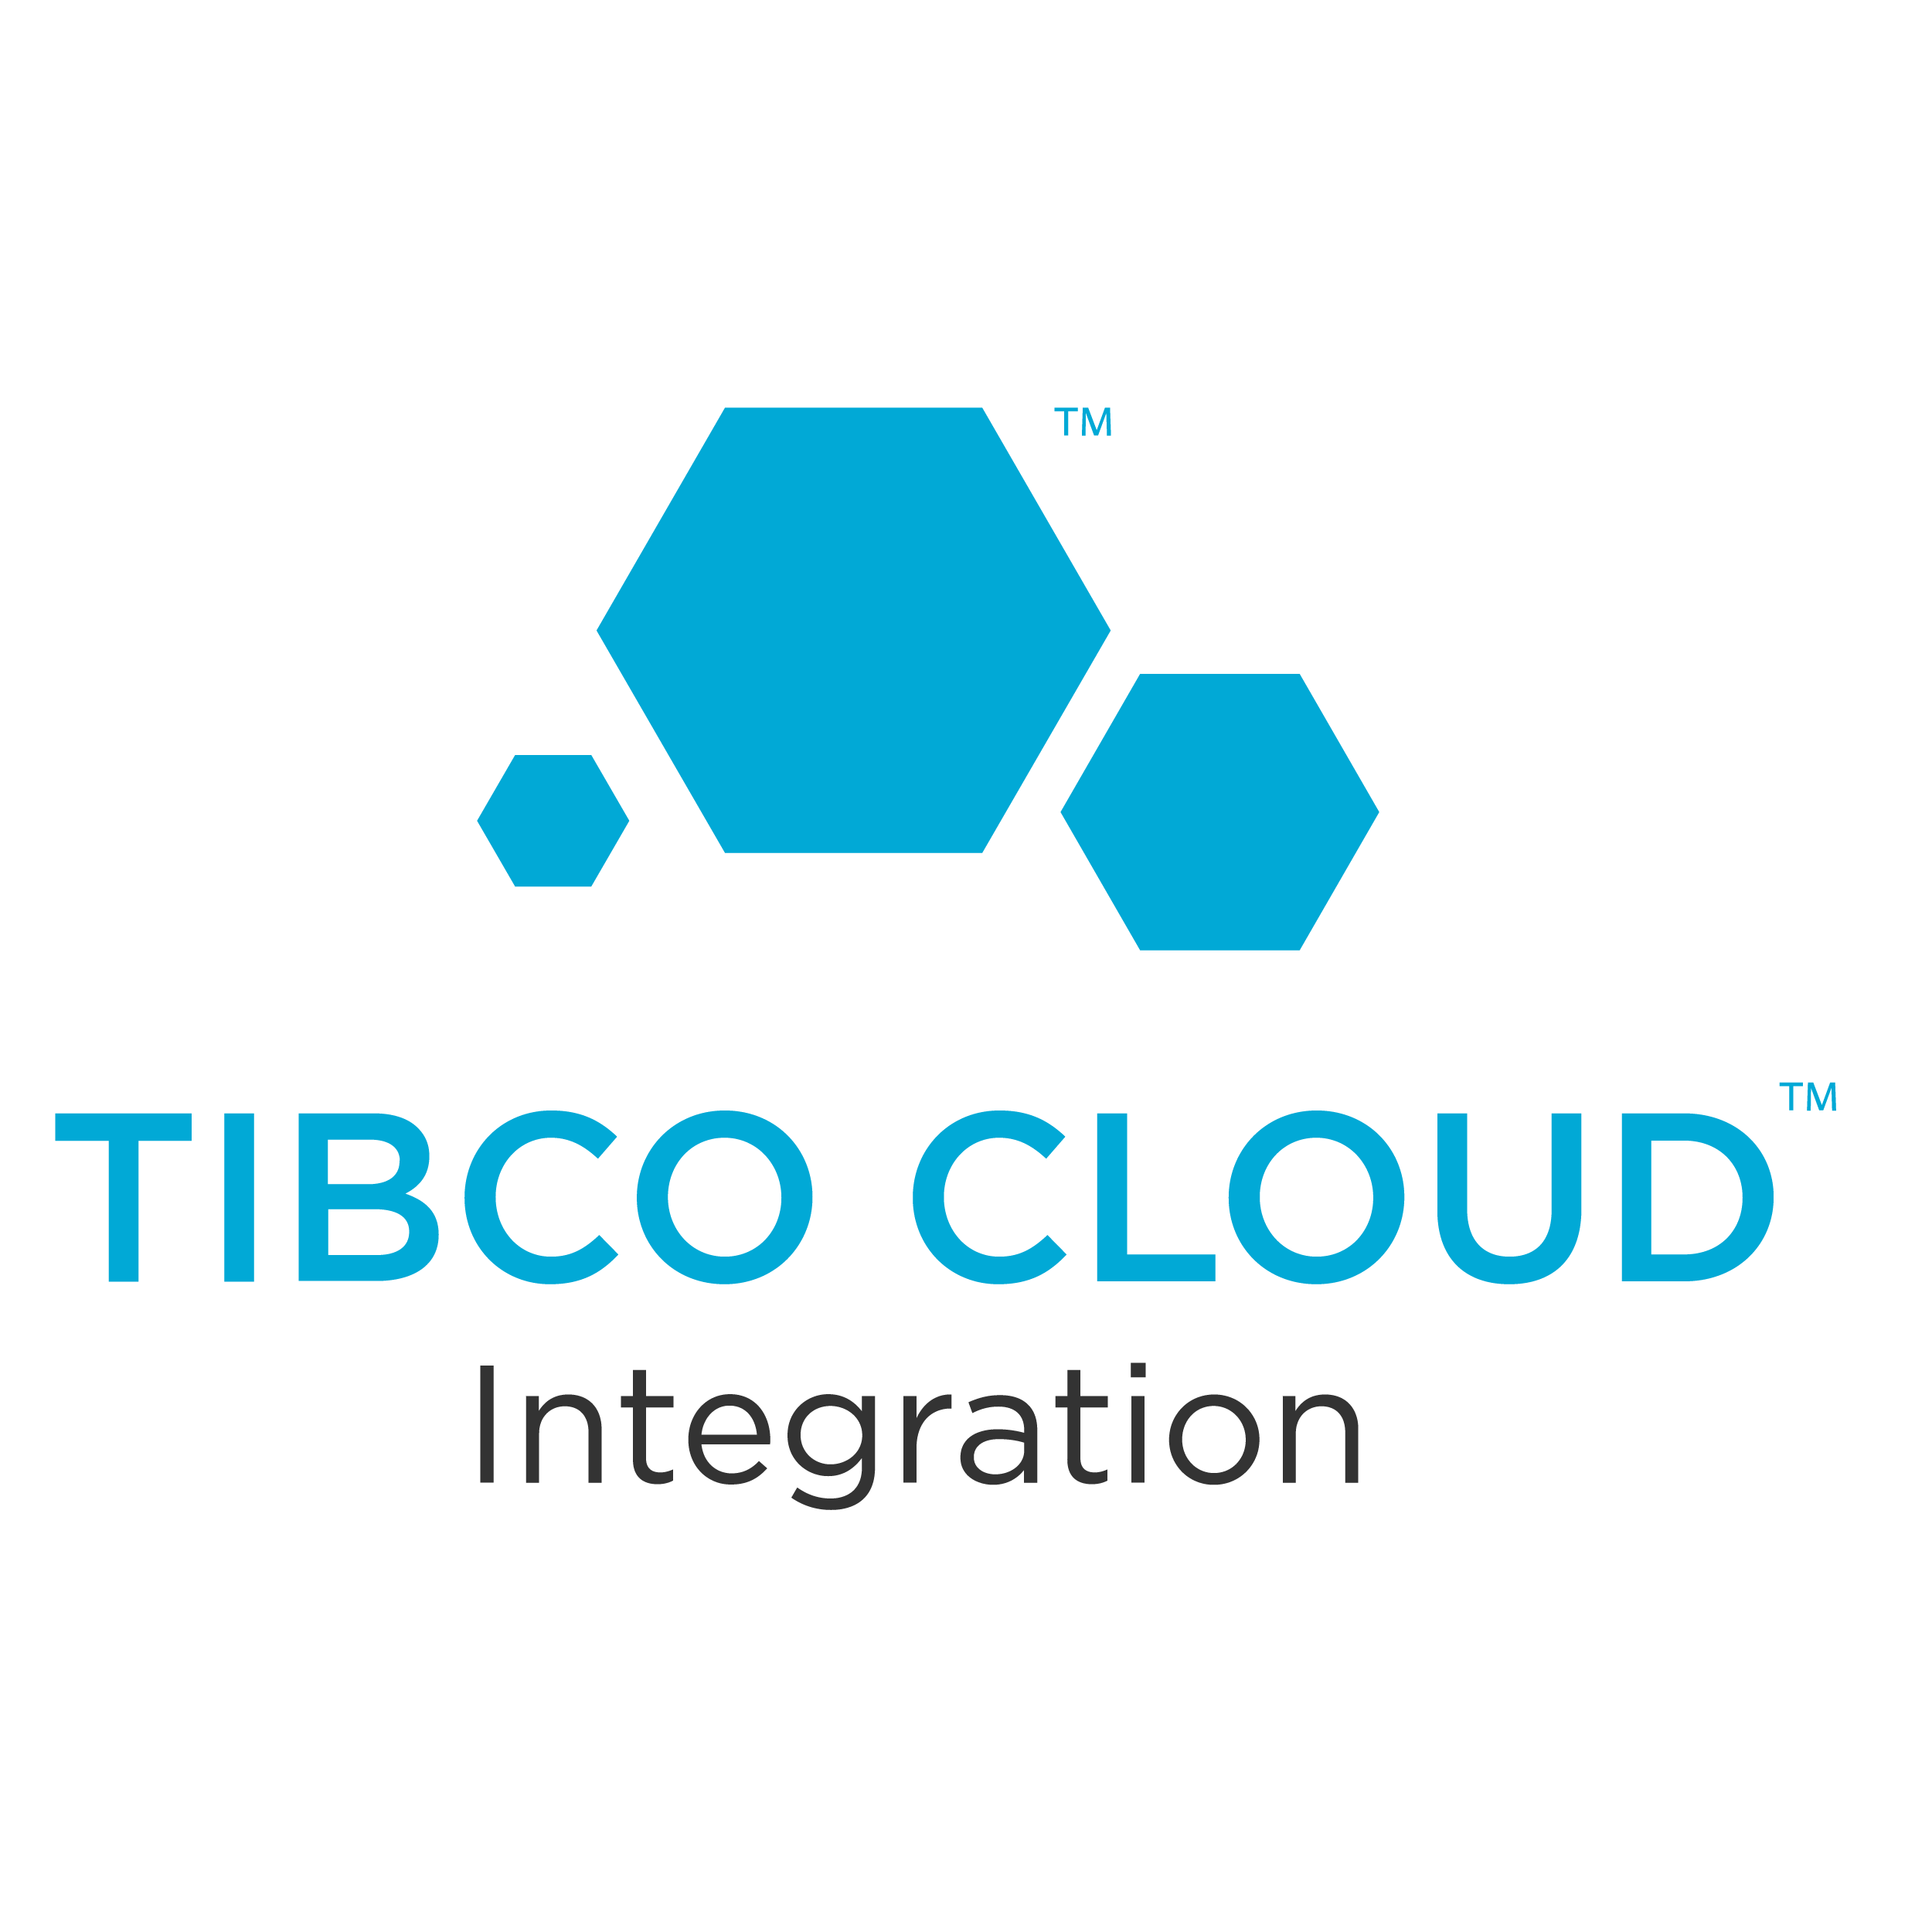 Tbico cloud